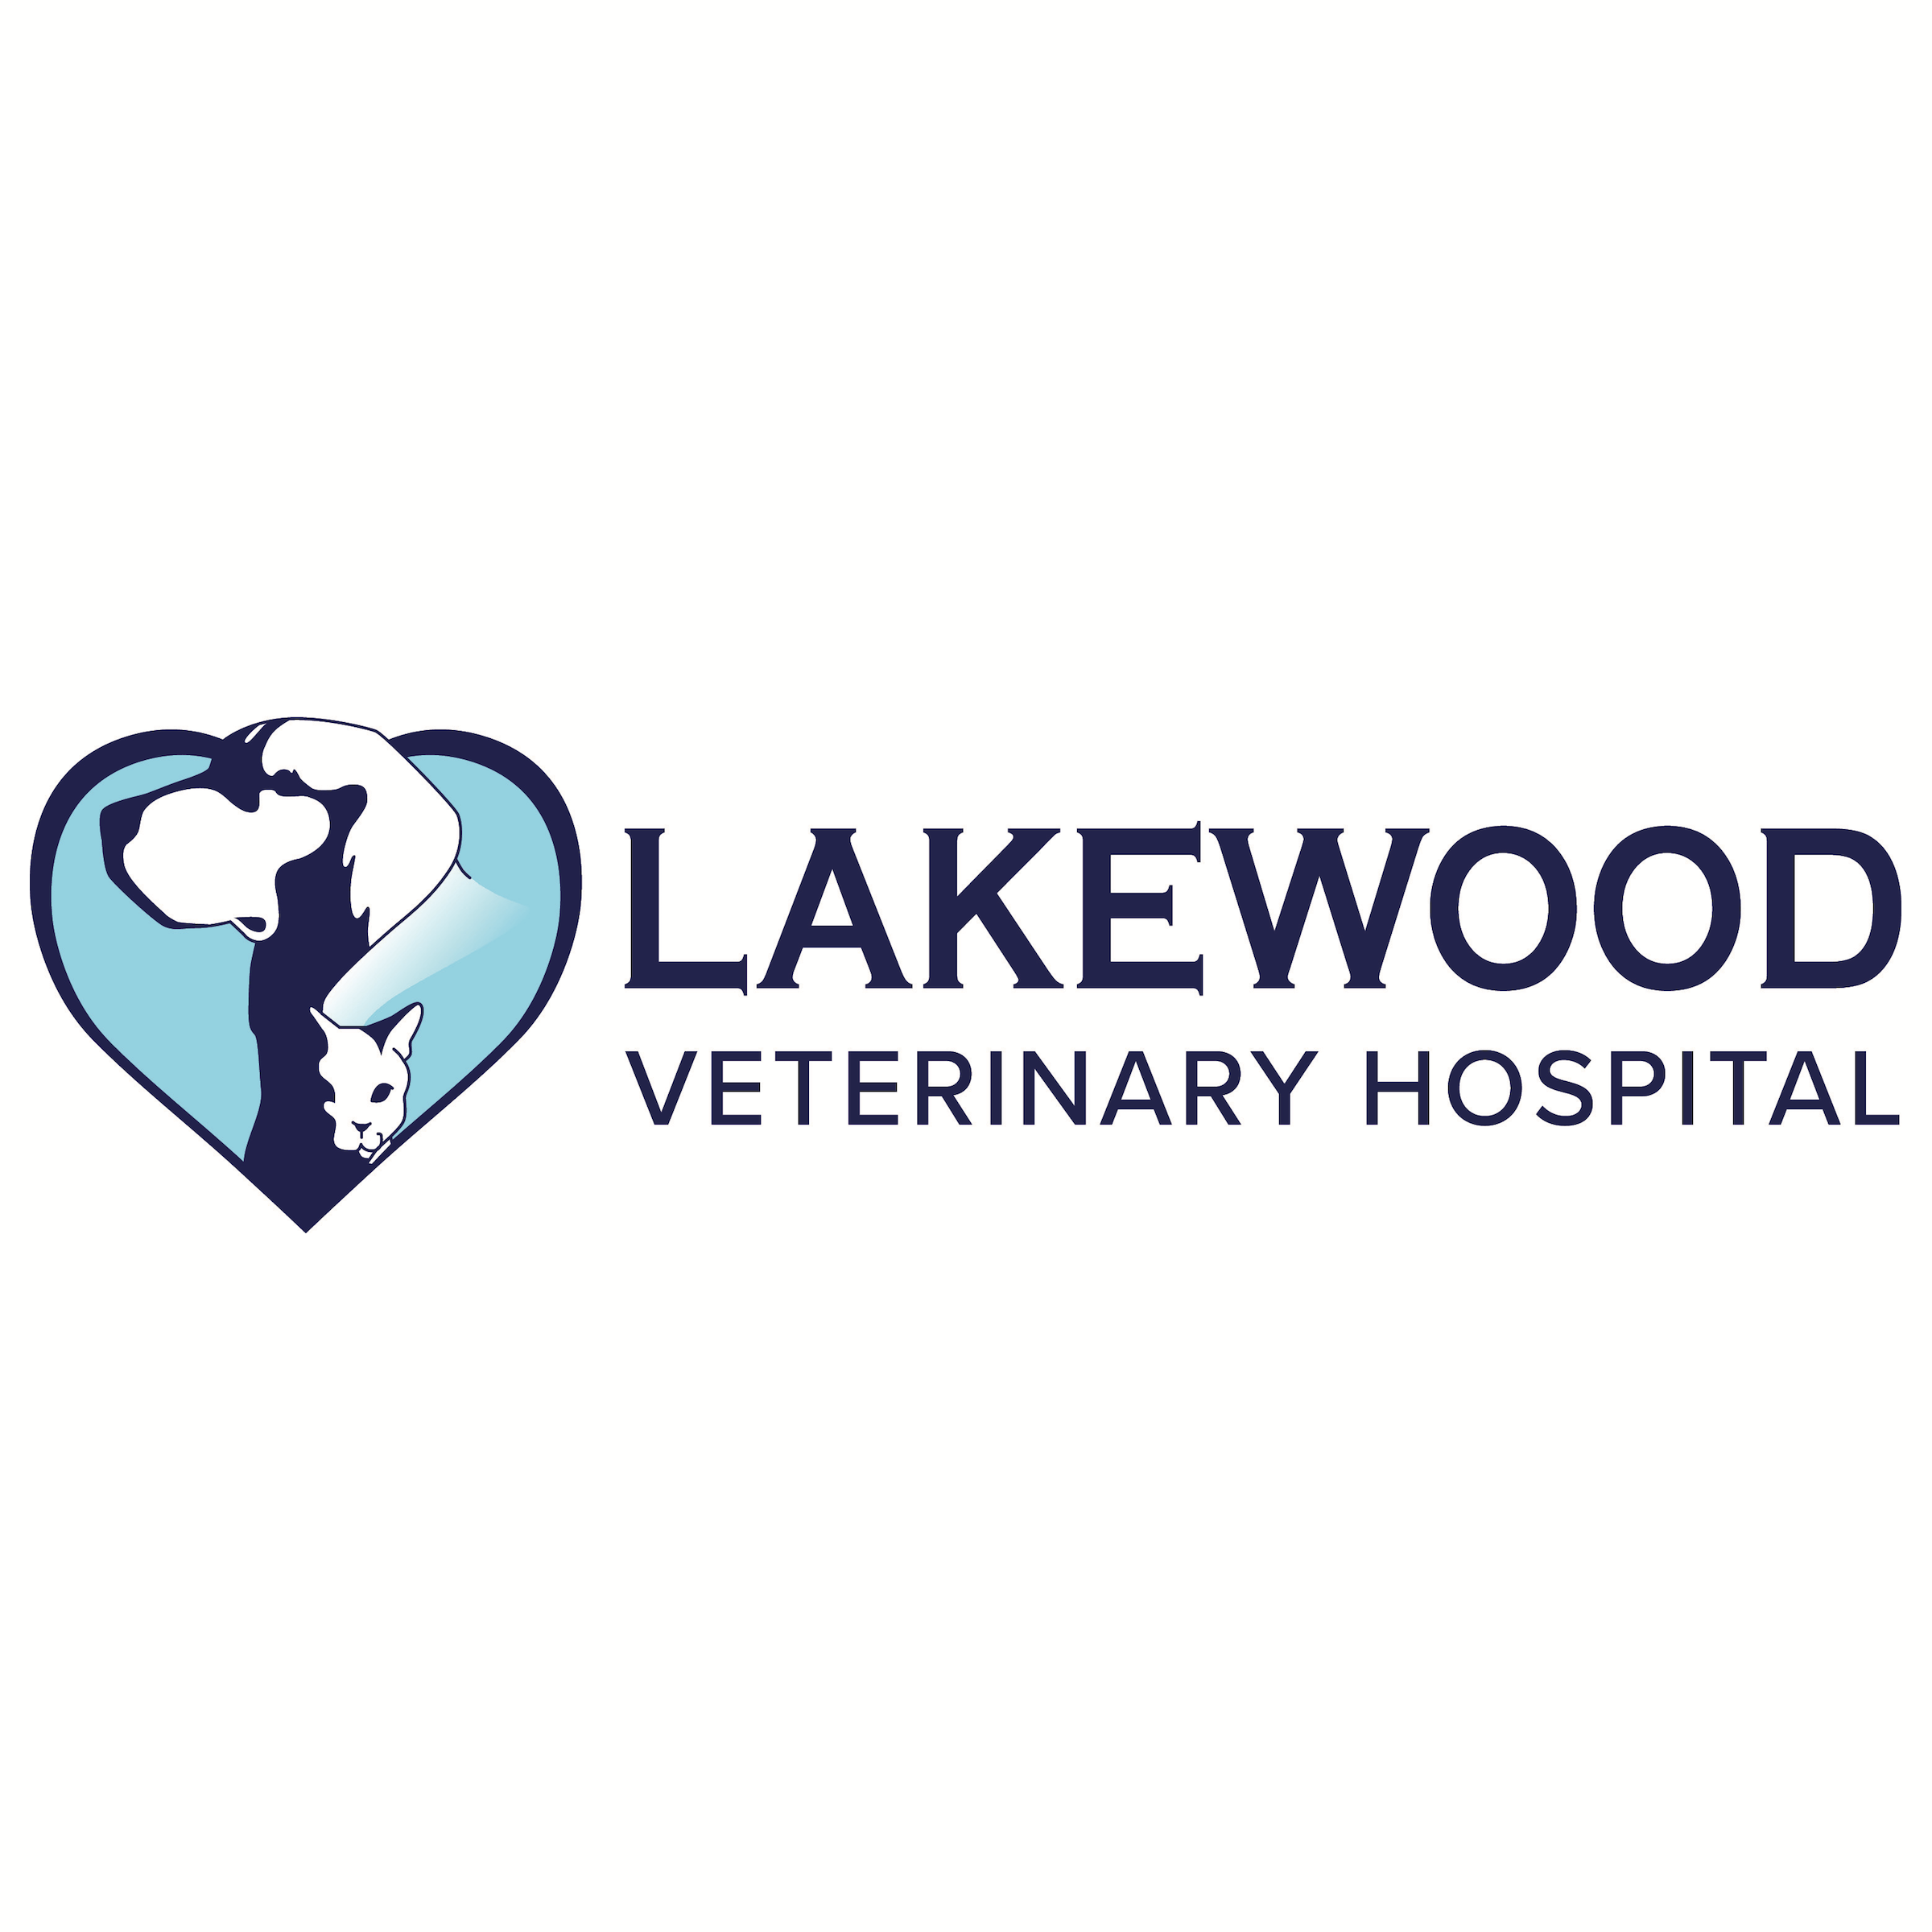 Lakewood Veterinary Hospital - Lakewood, CO 80226 - (303)233-5614 | ShowMeLocal.com